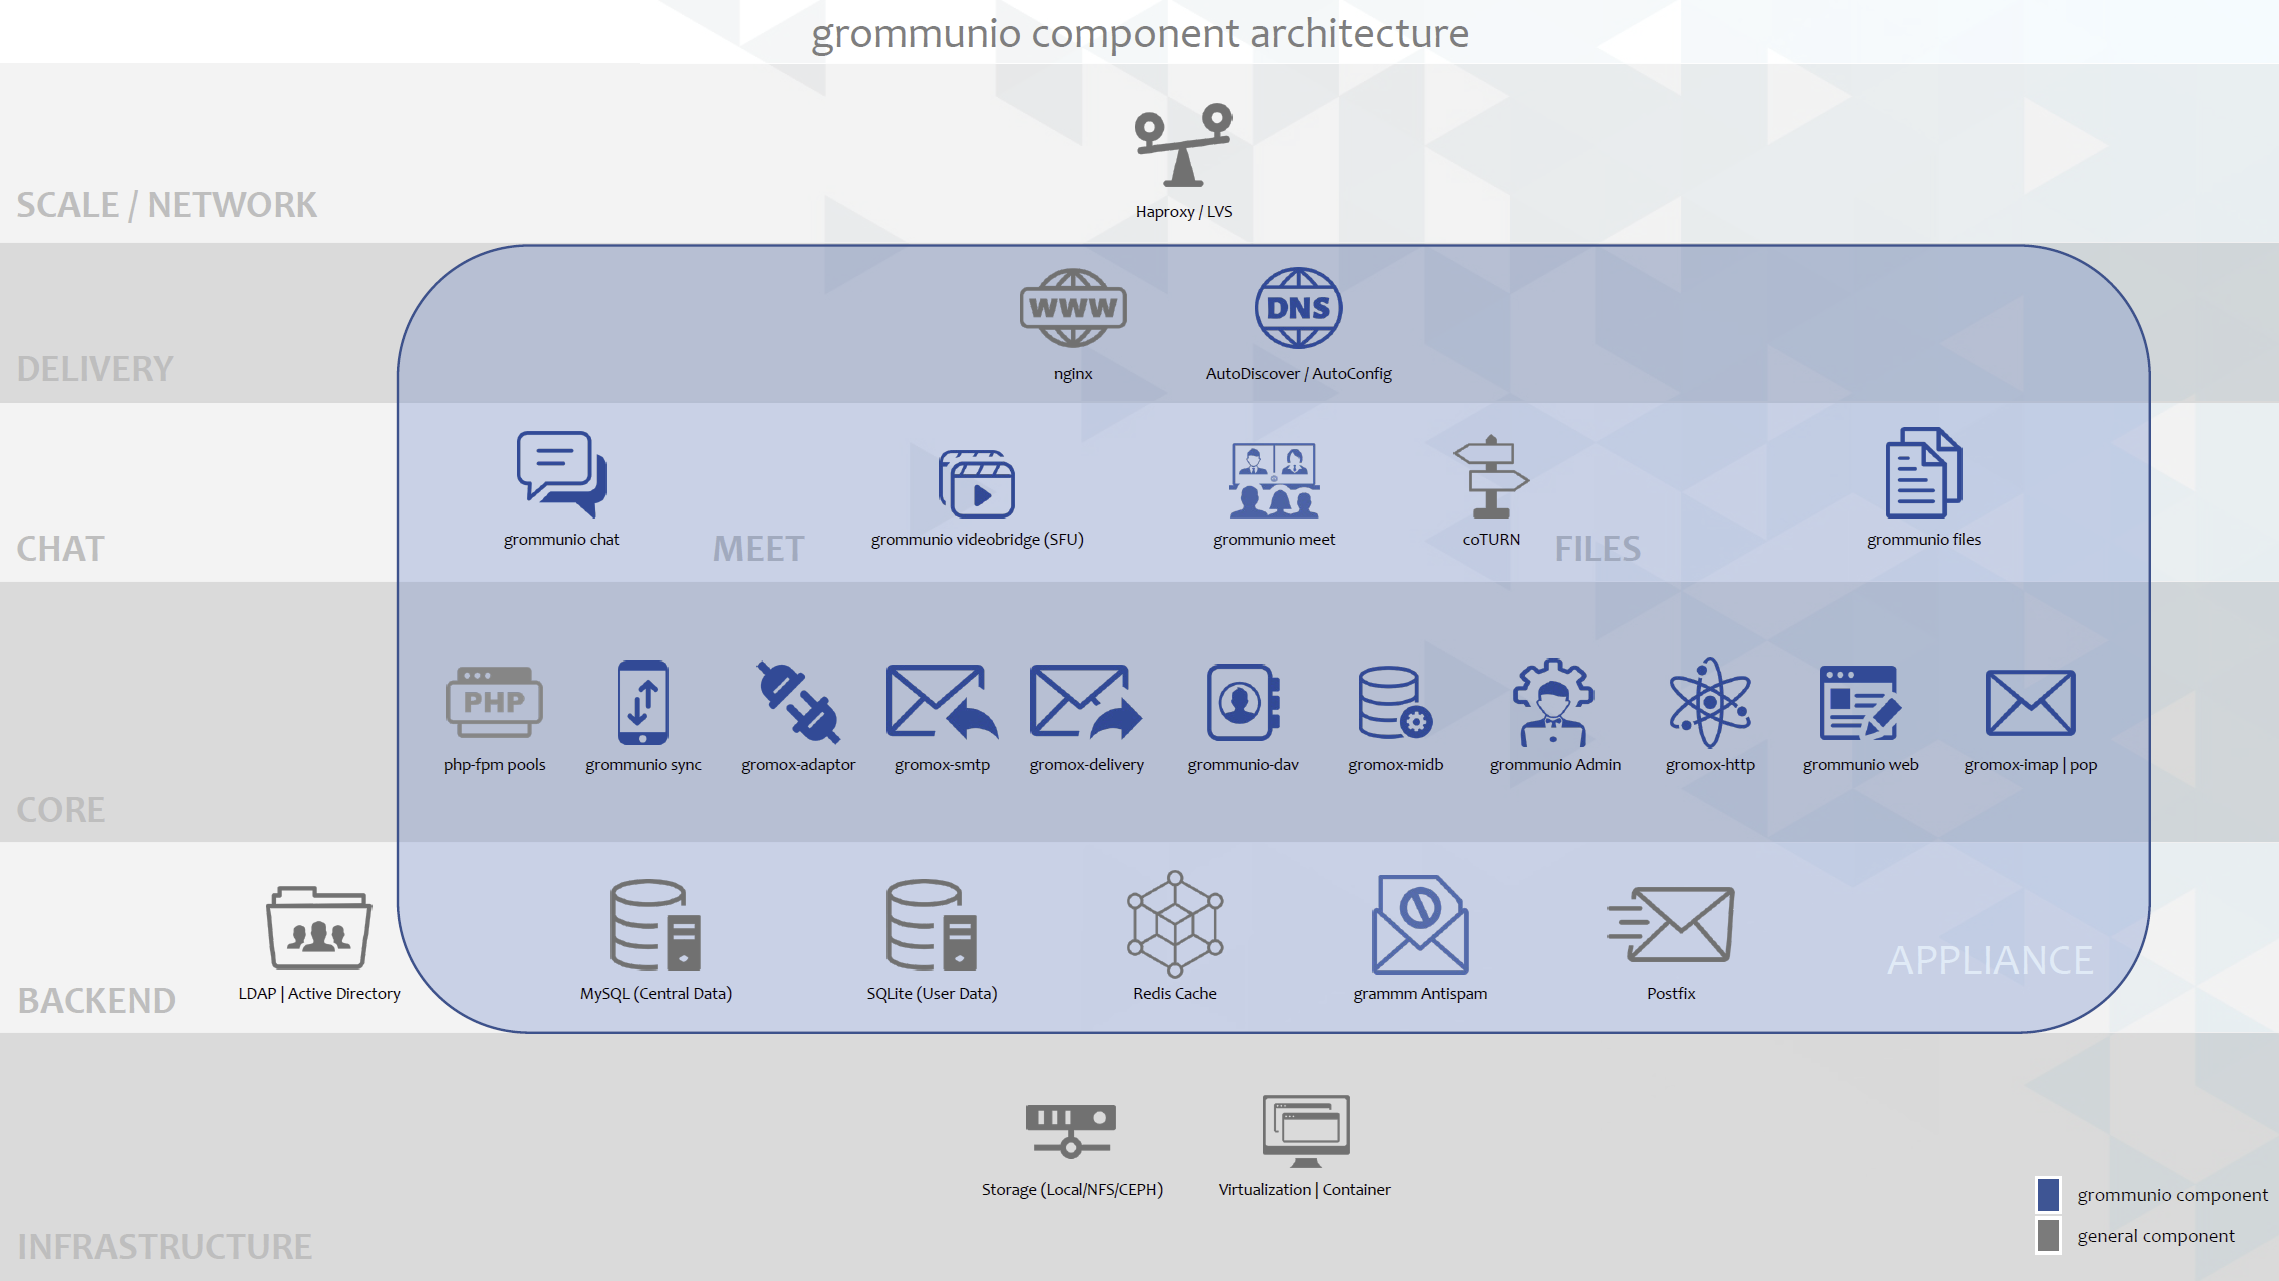 Architecture of grommunio components